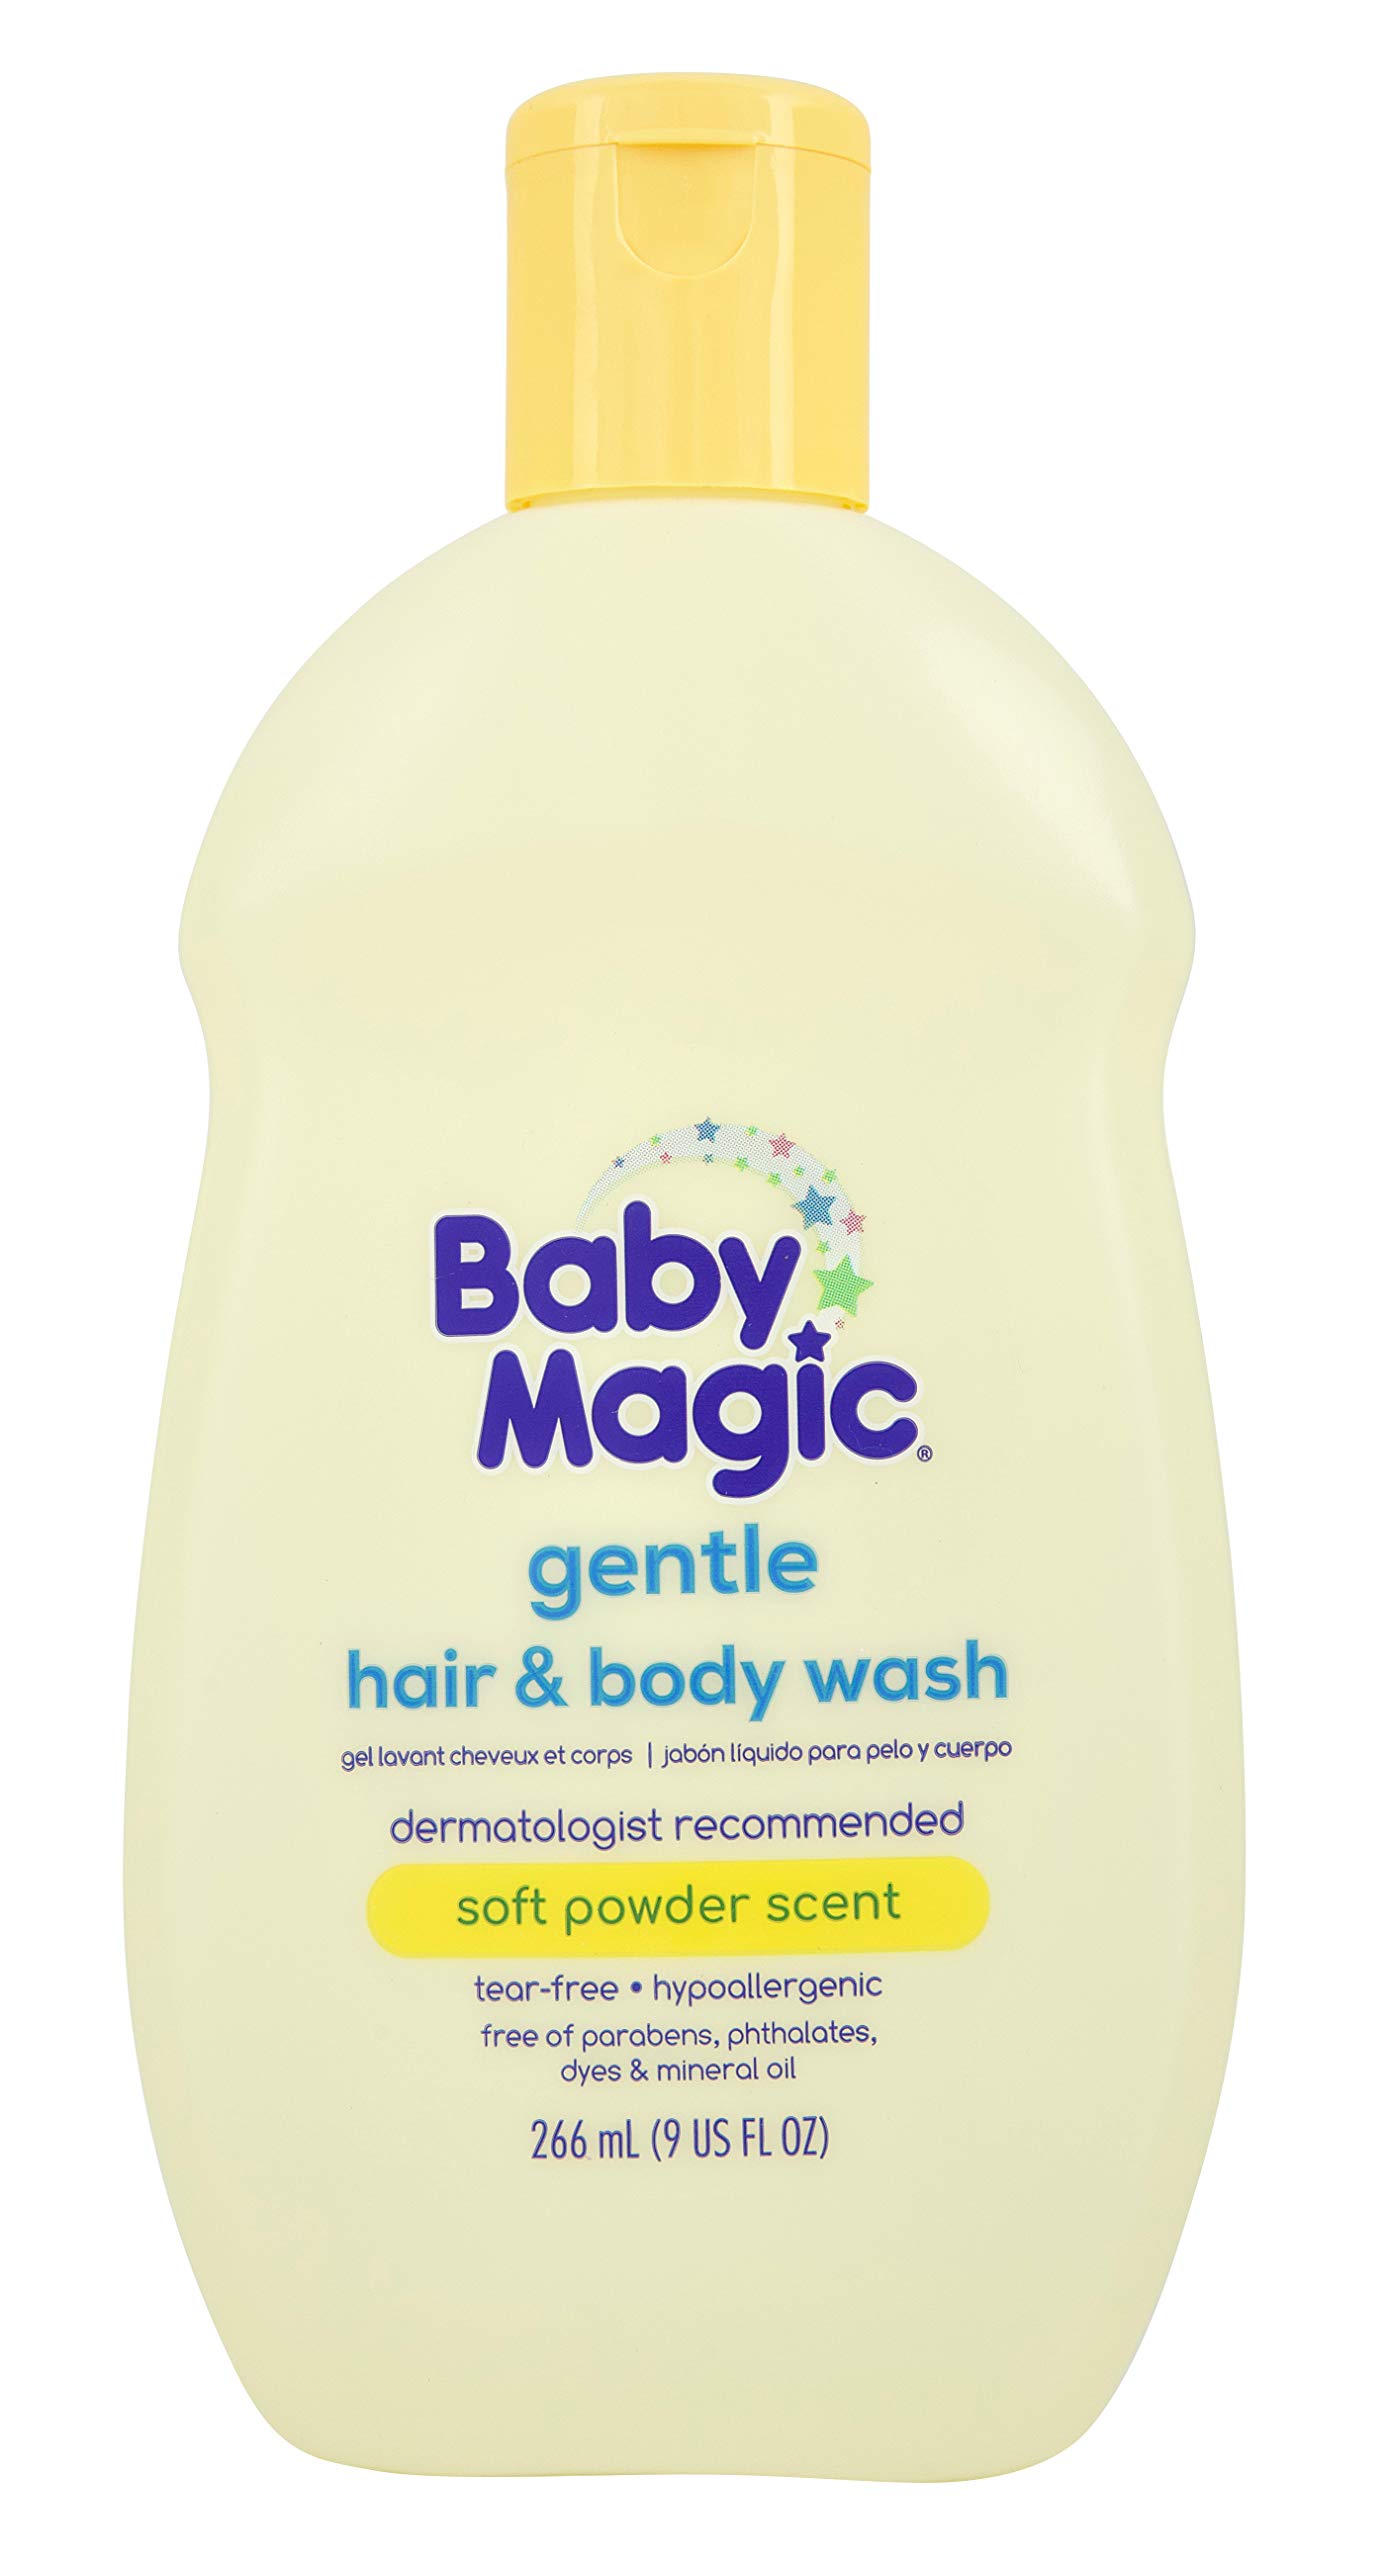 Mua Baby Magic Gentle Hair & Body Wash | Tear-Free, Free of Parabens,  Phthalates, Sulfates and Dyes, Calendula Oil & Coconut Oil, Soft Powder  Scent, 9 Fl Oz trên Amazon Mỹ chính